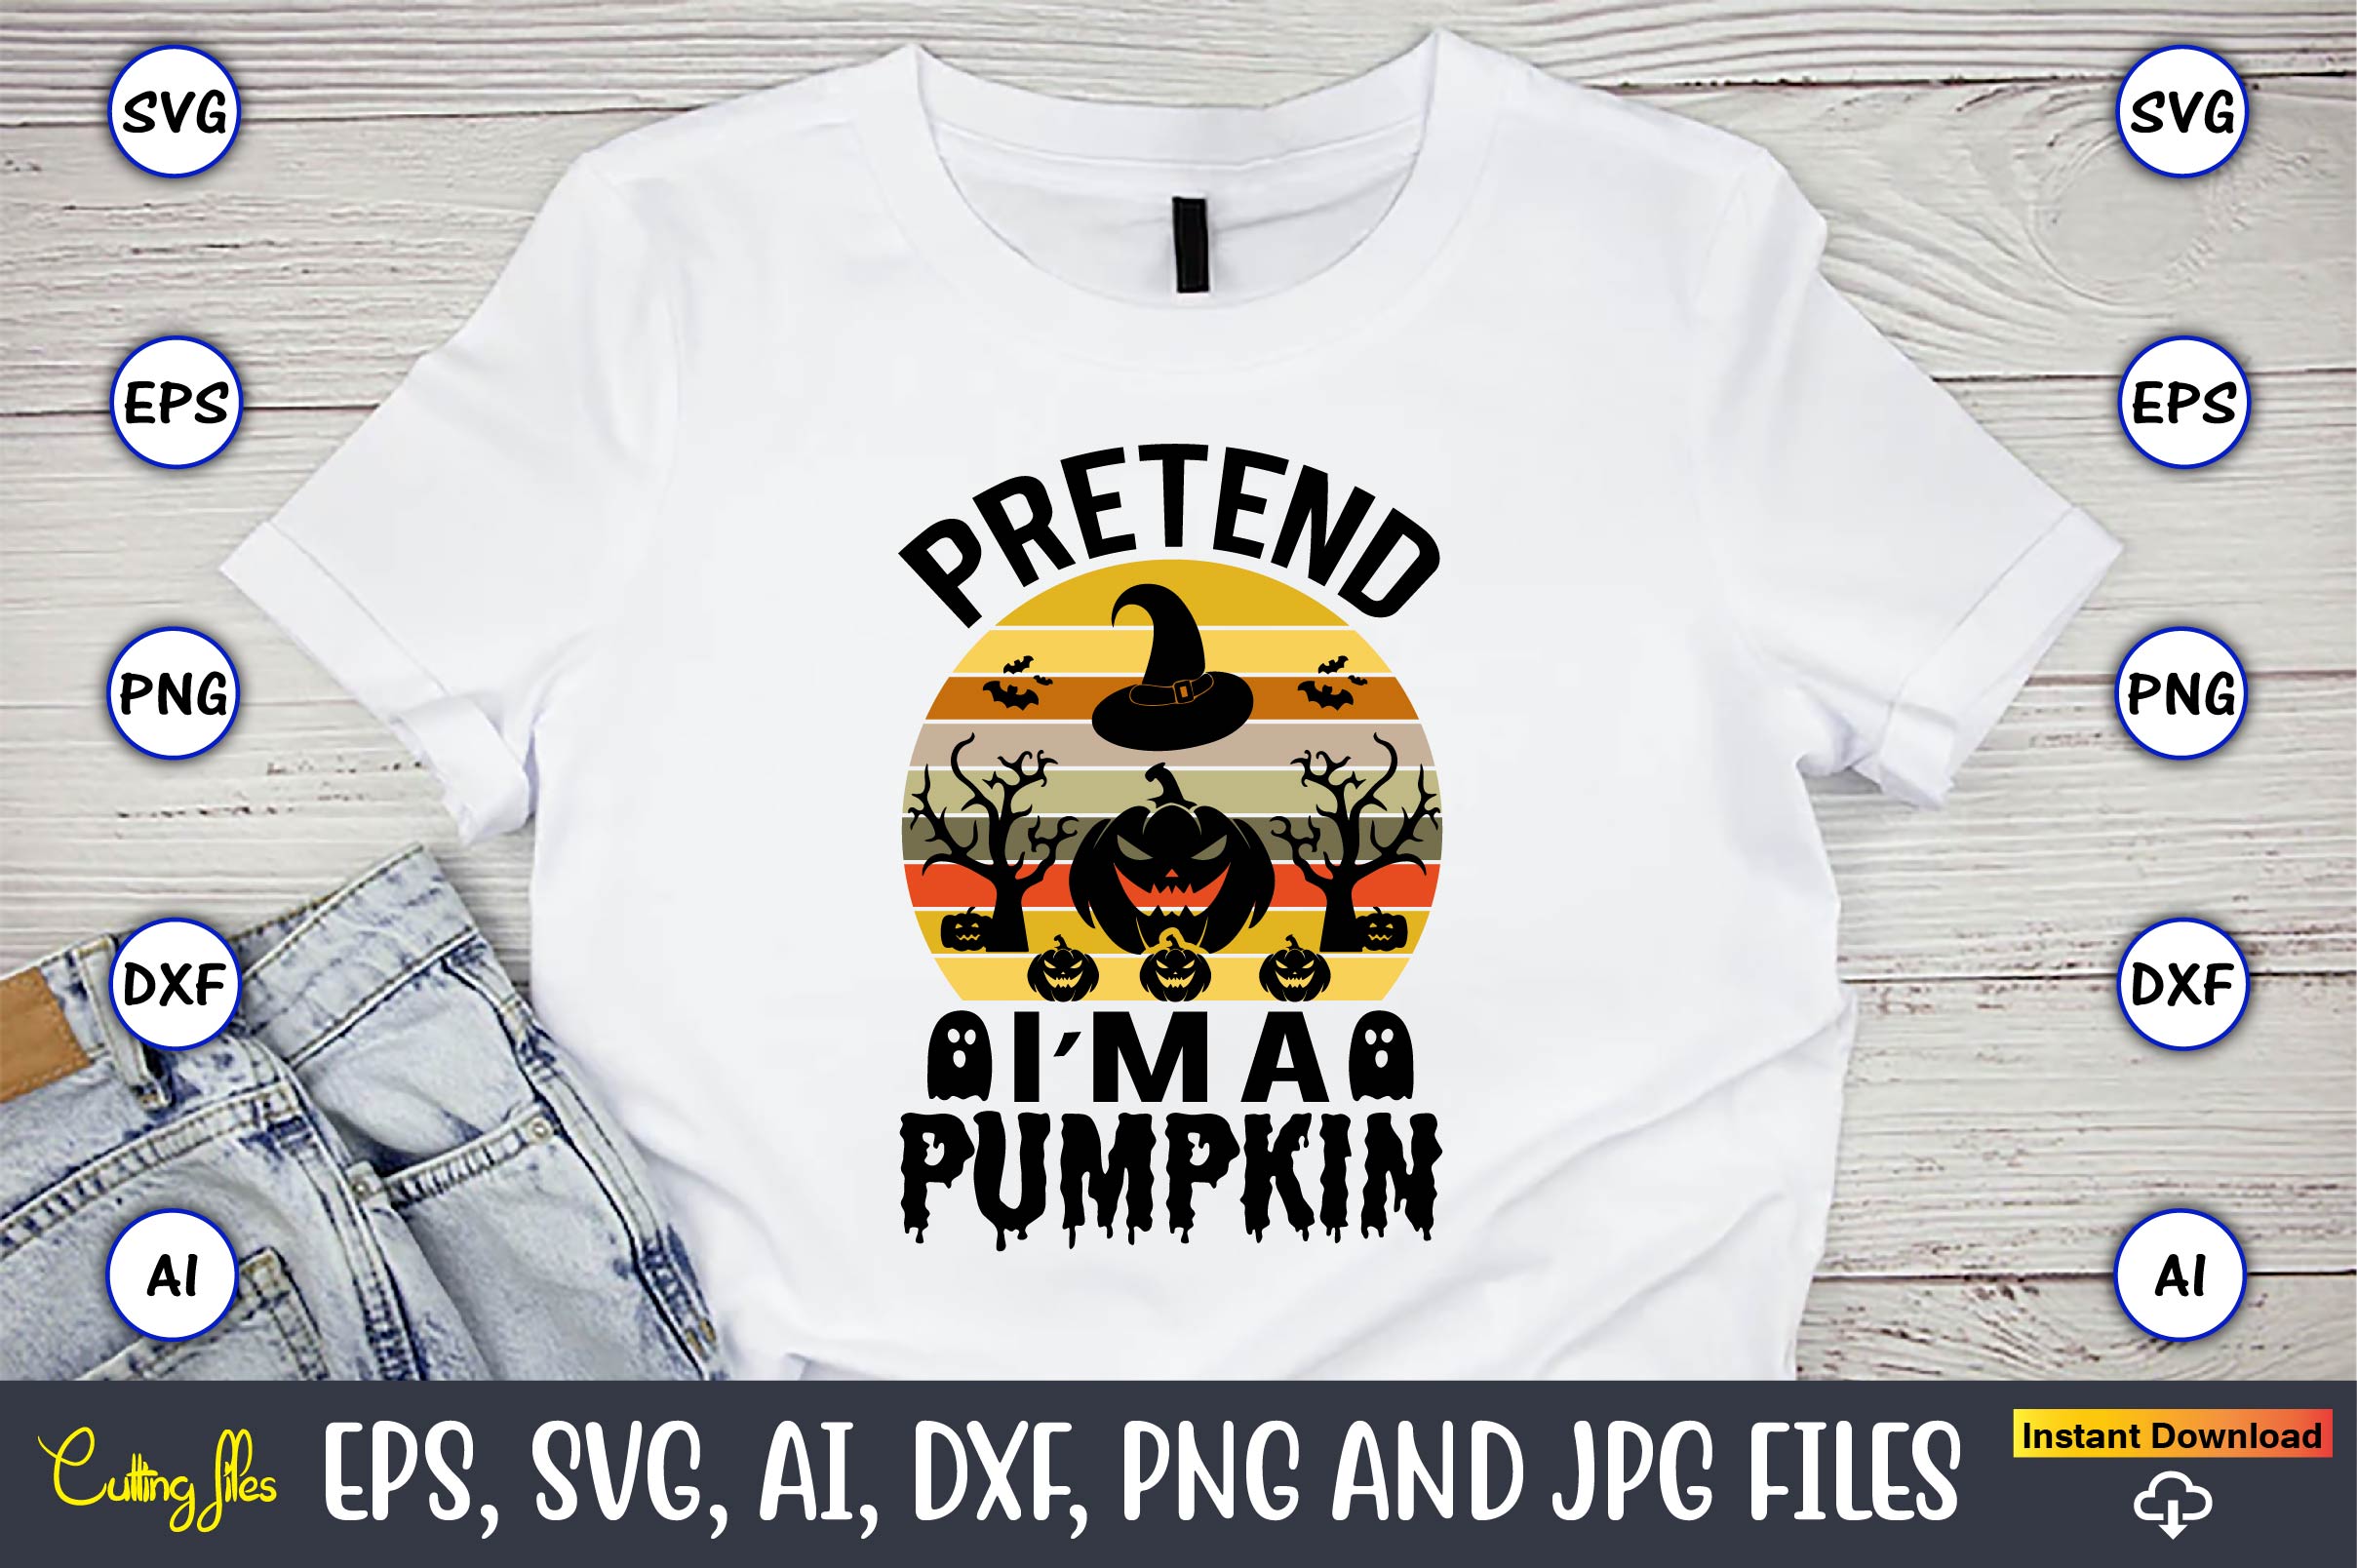 Halloween Pumpkin SVG T-Shirt Design Bundle preview image.